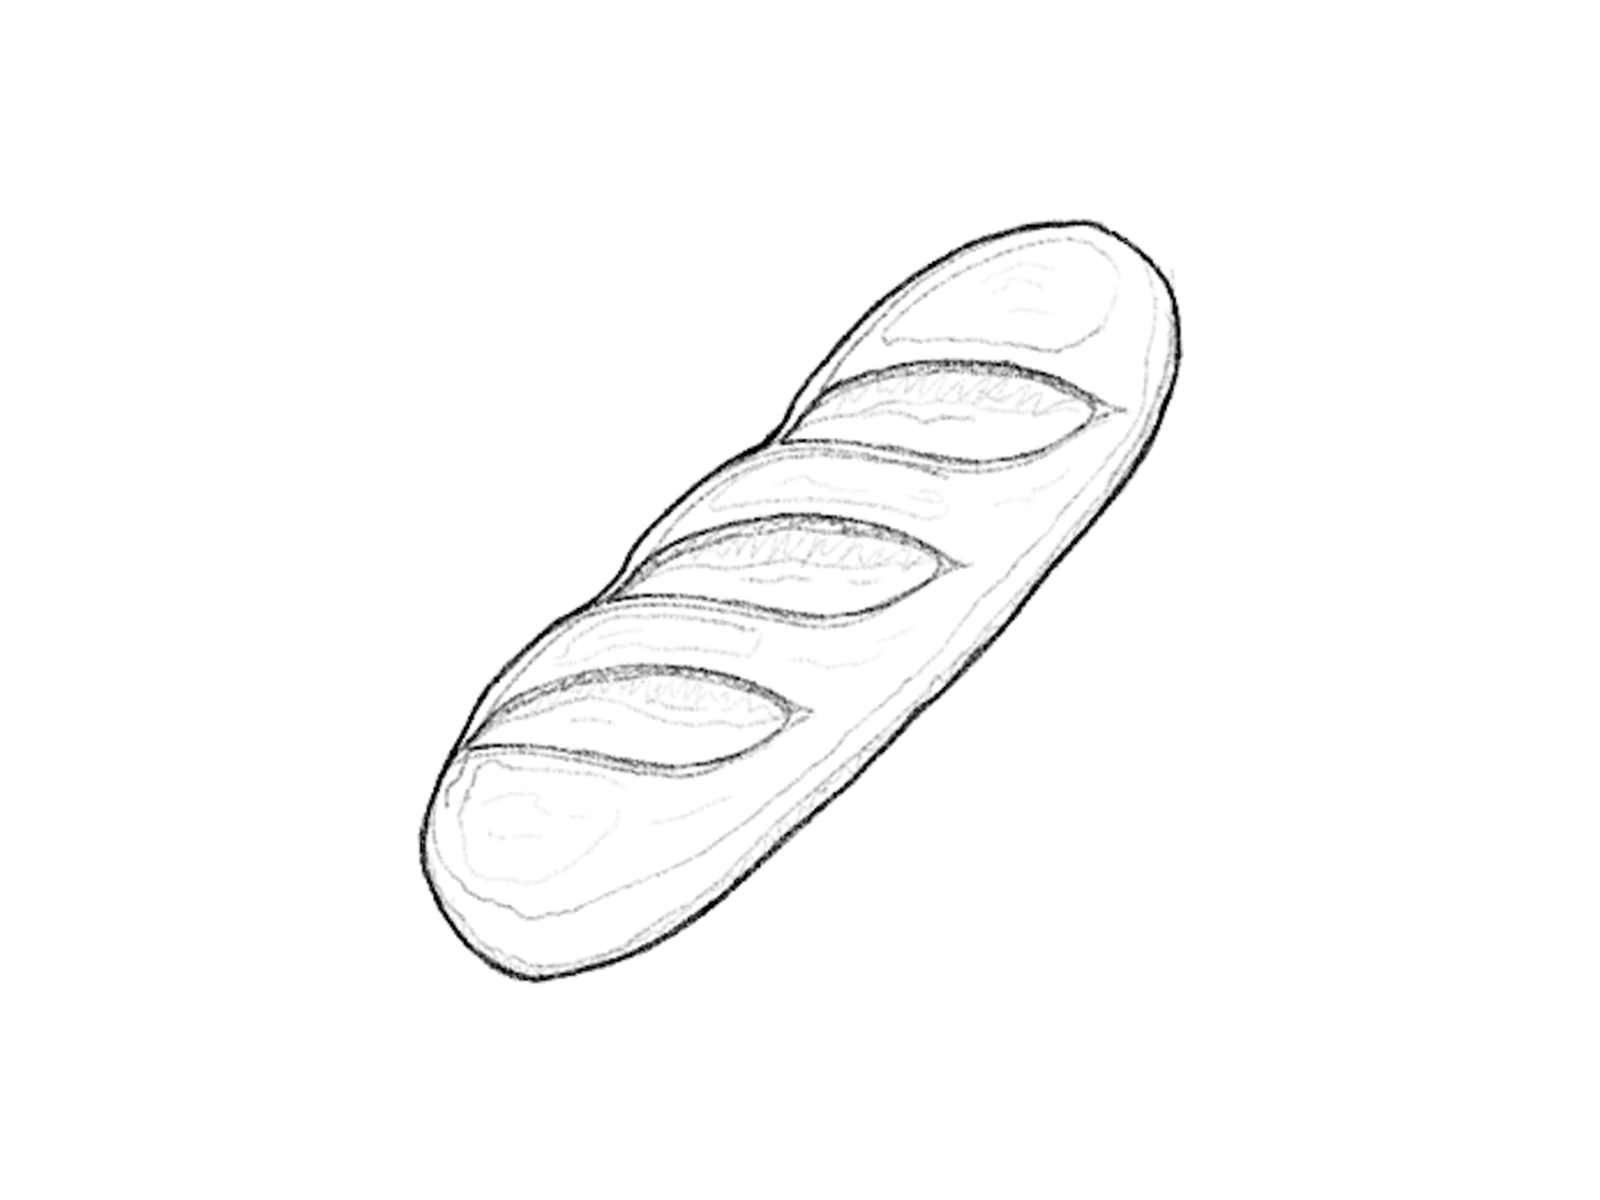 baguette sketch